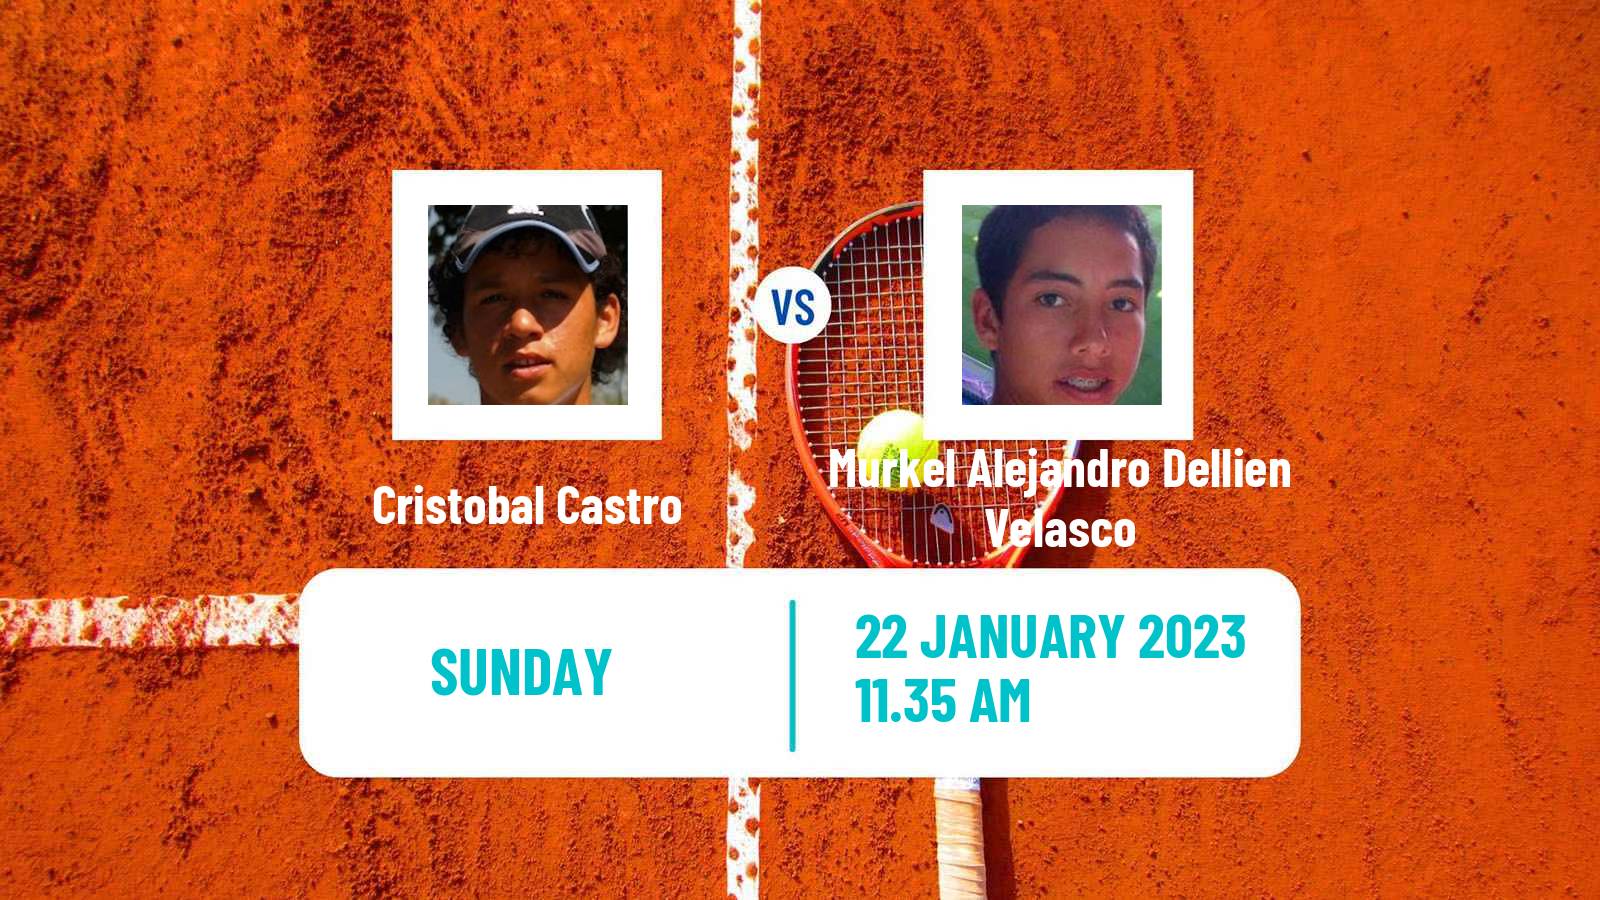 Tennis ATP Challenger Cristobal Castro - Murkel Alejandro Dellien Velasco